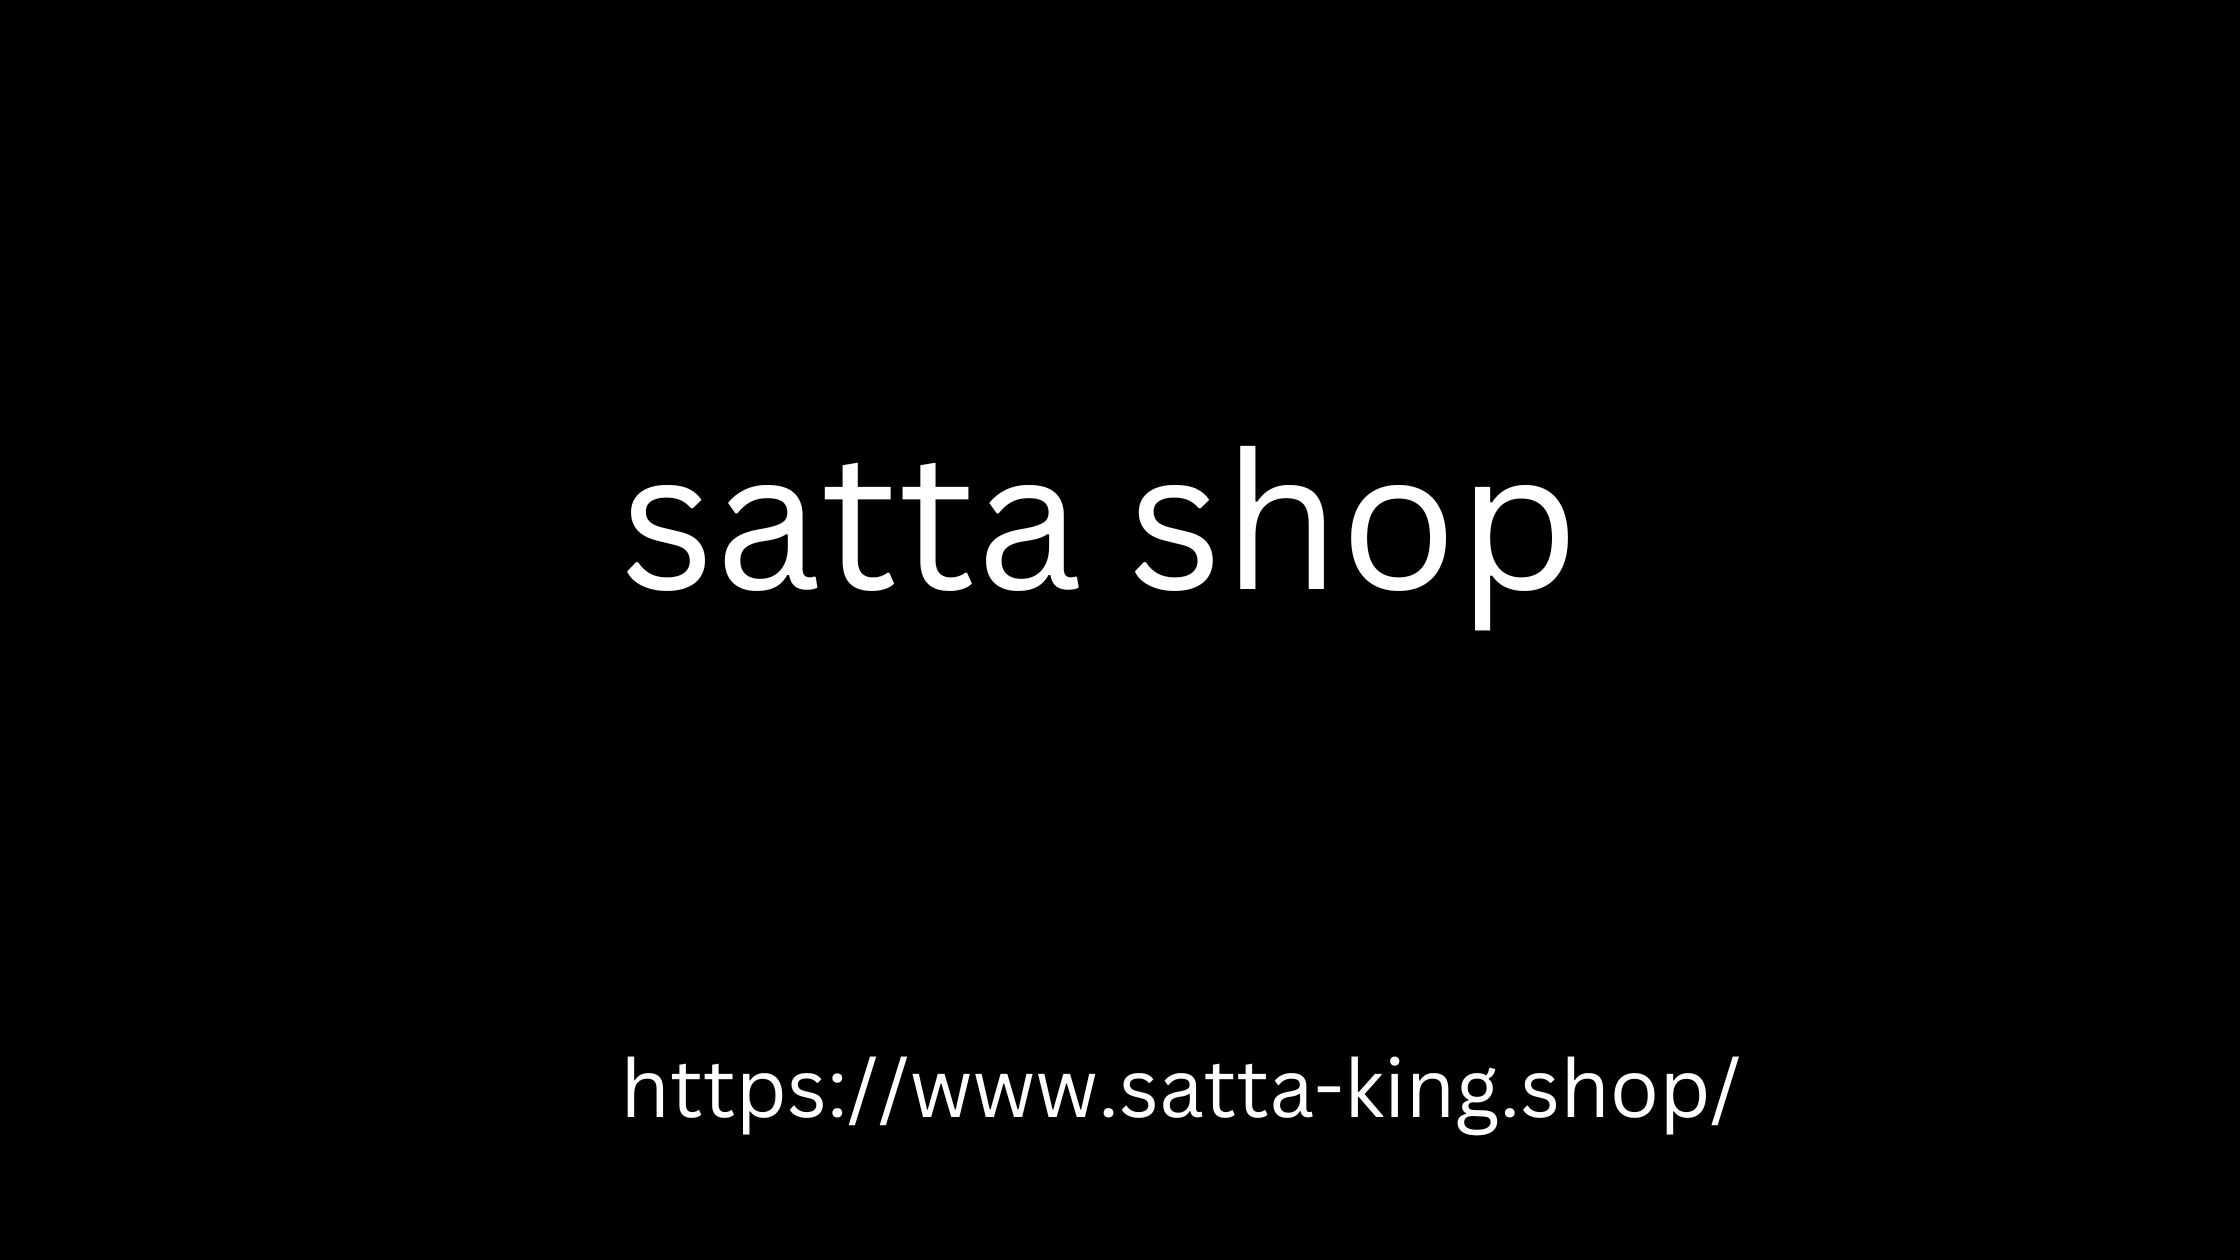 Satta king